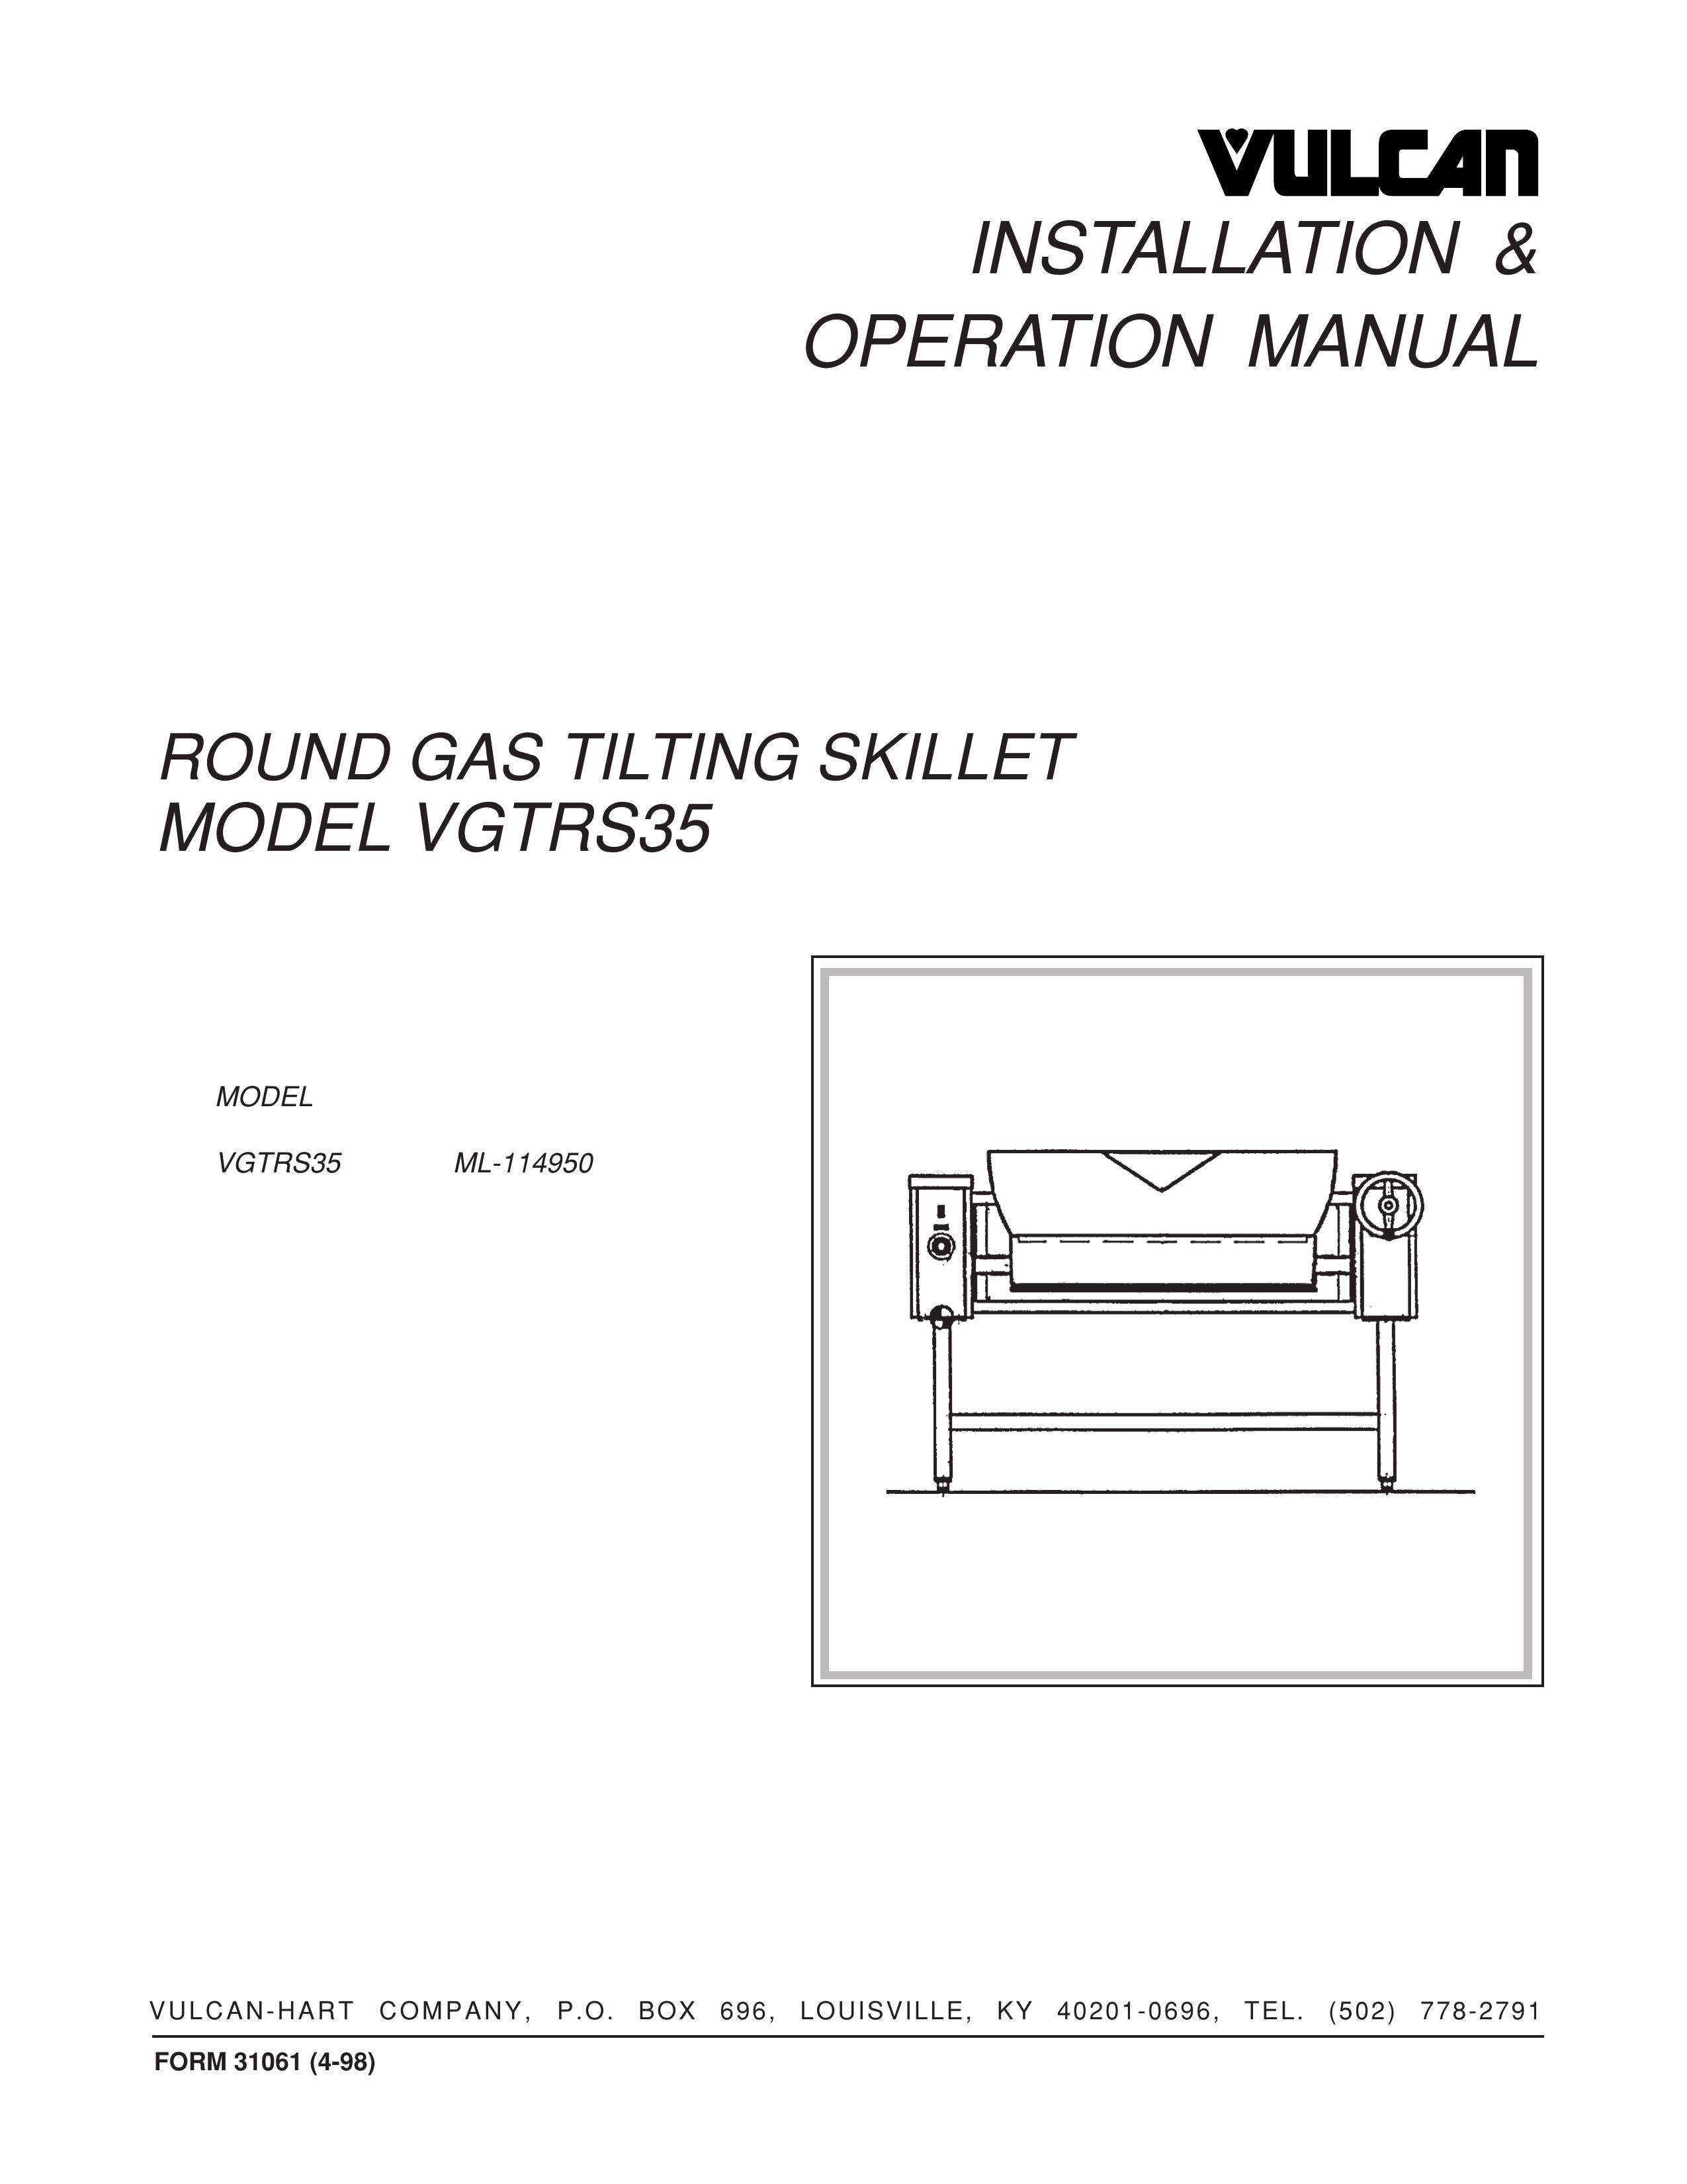 Vulcan-Hart VGTRS35 Tiller User Manual